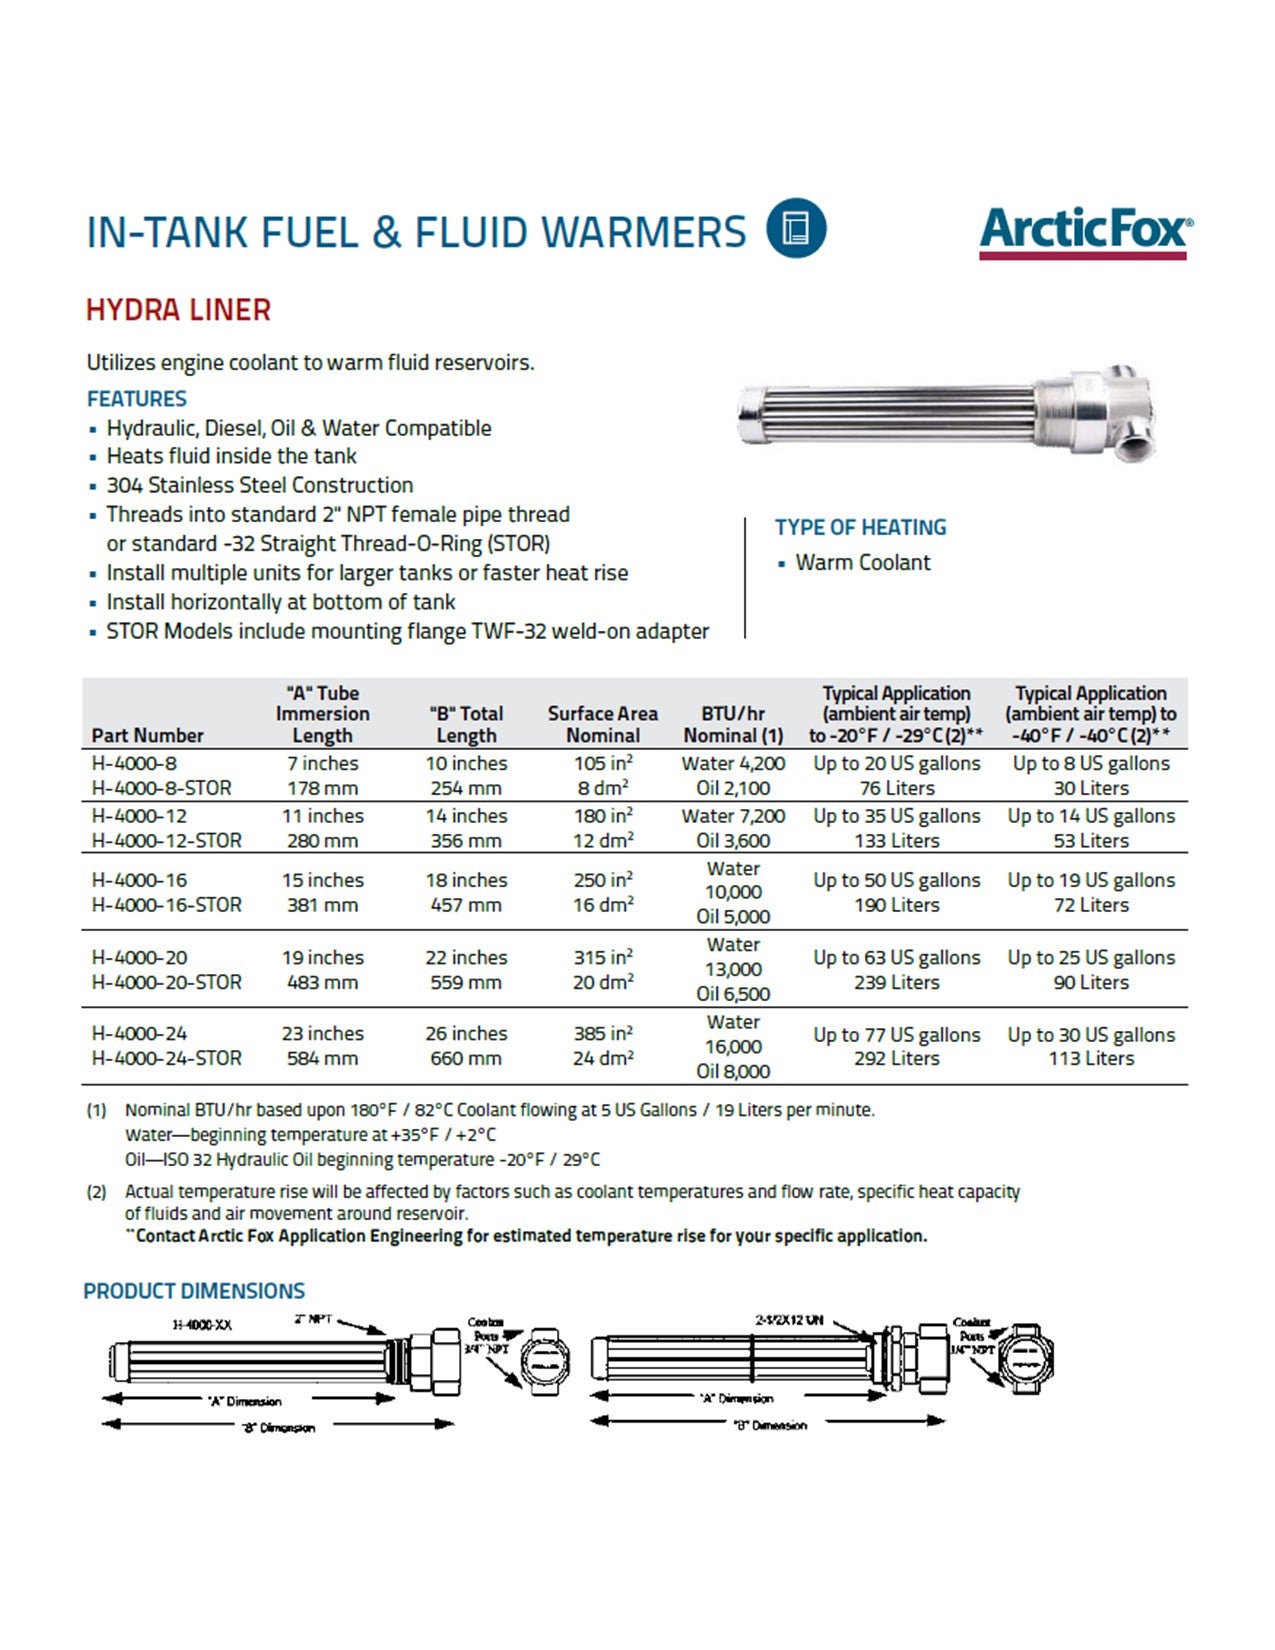 Arctic Fox Hydra Liner In-Tank Fluid Warmer H-4000-16